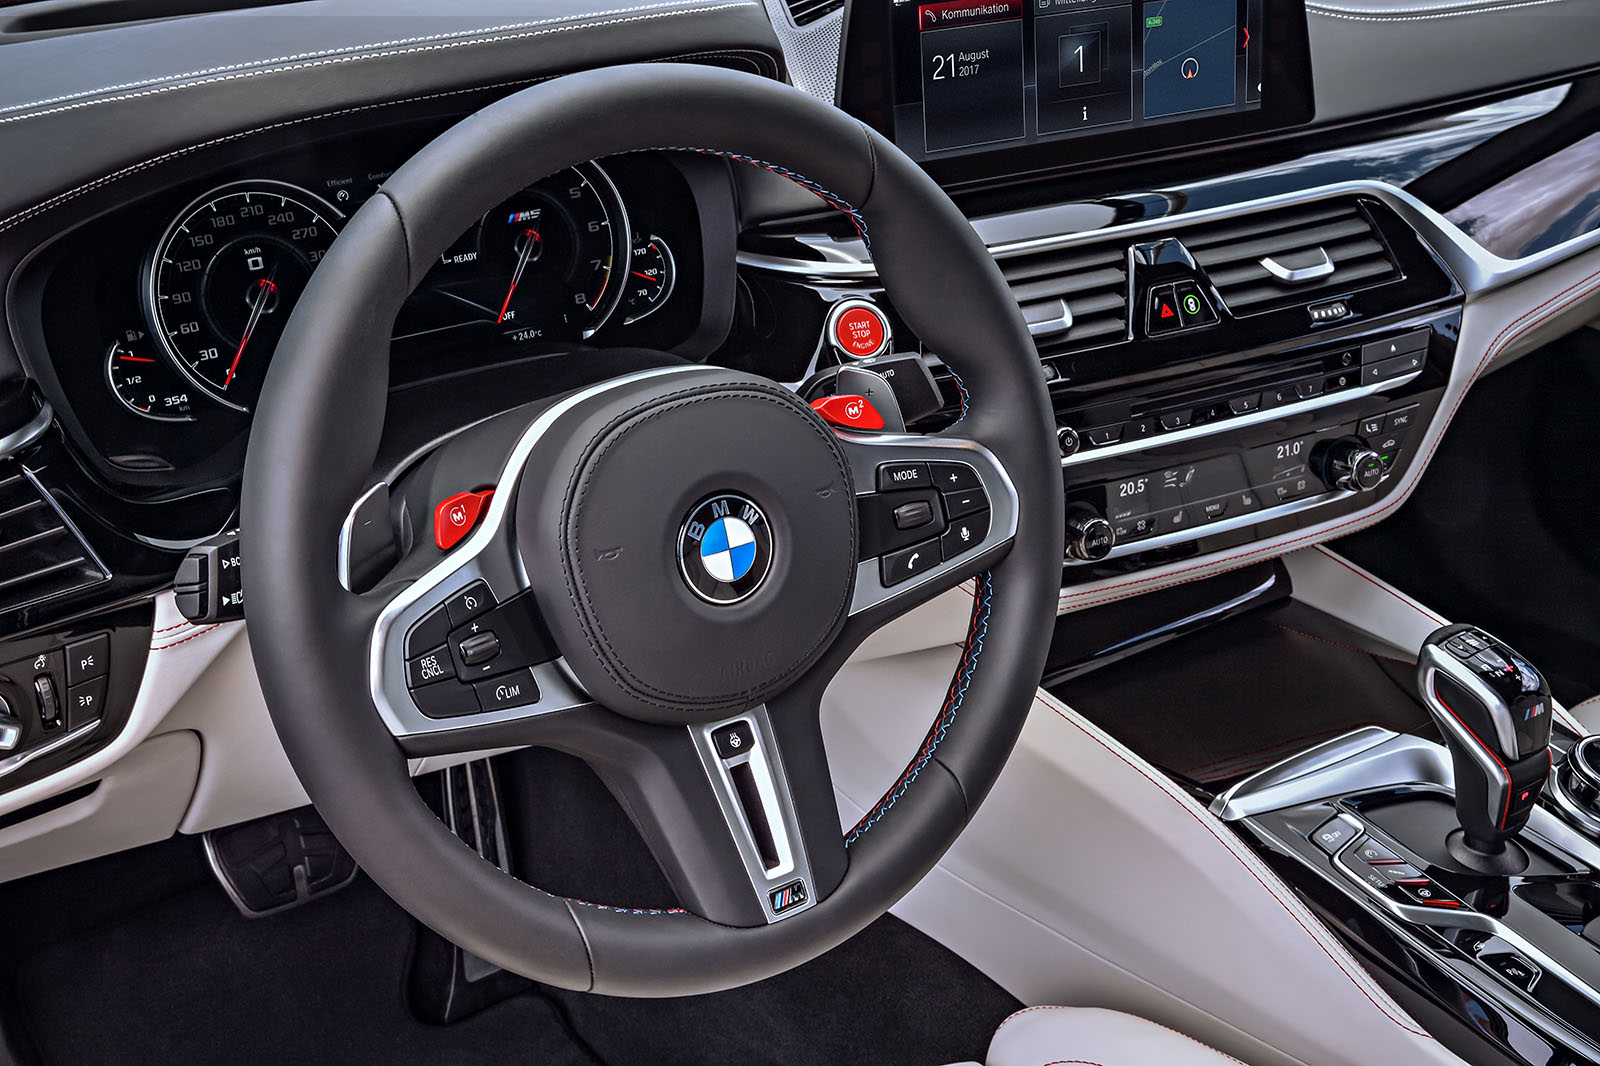 File:BMW E60 M5 Interior.JPG - Wikimedia Commons